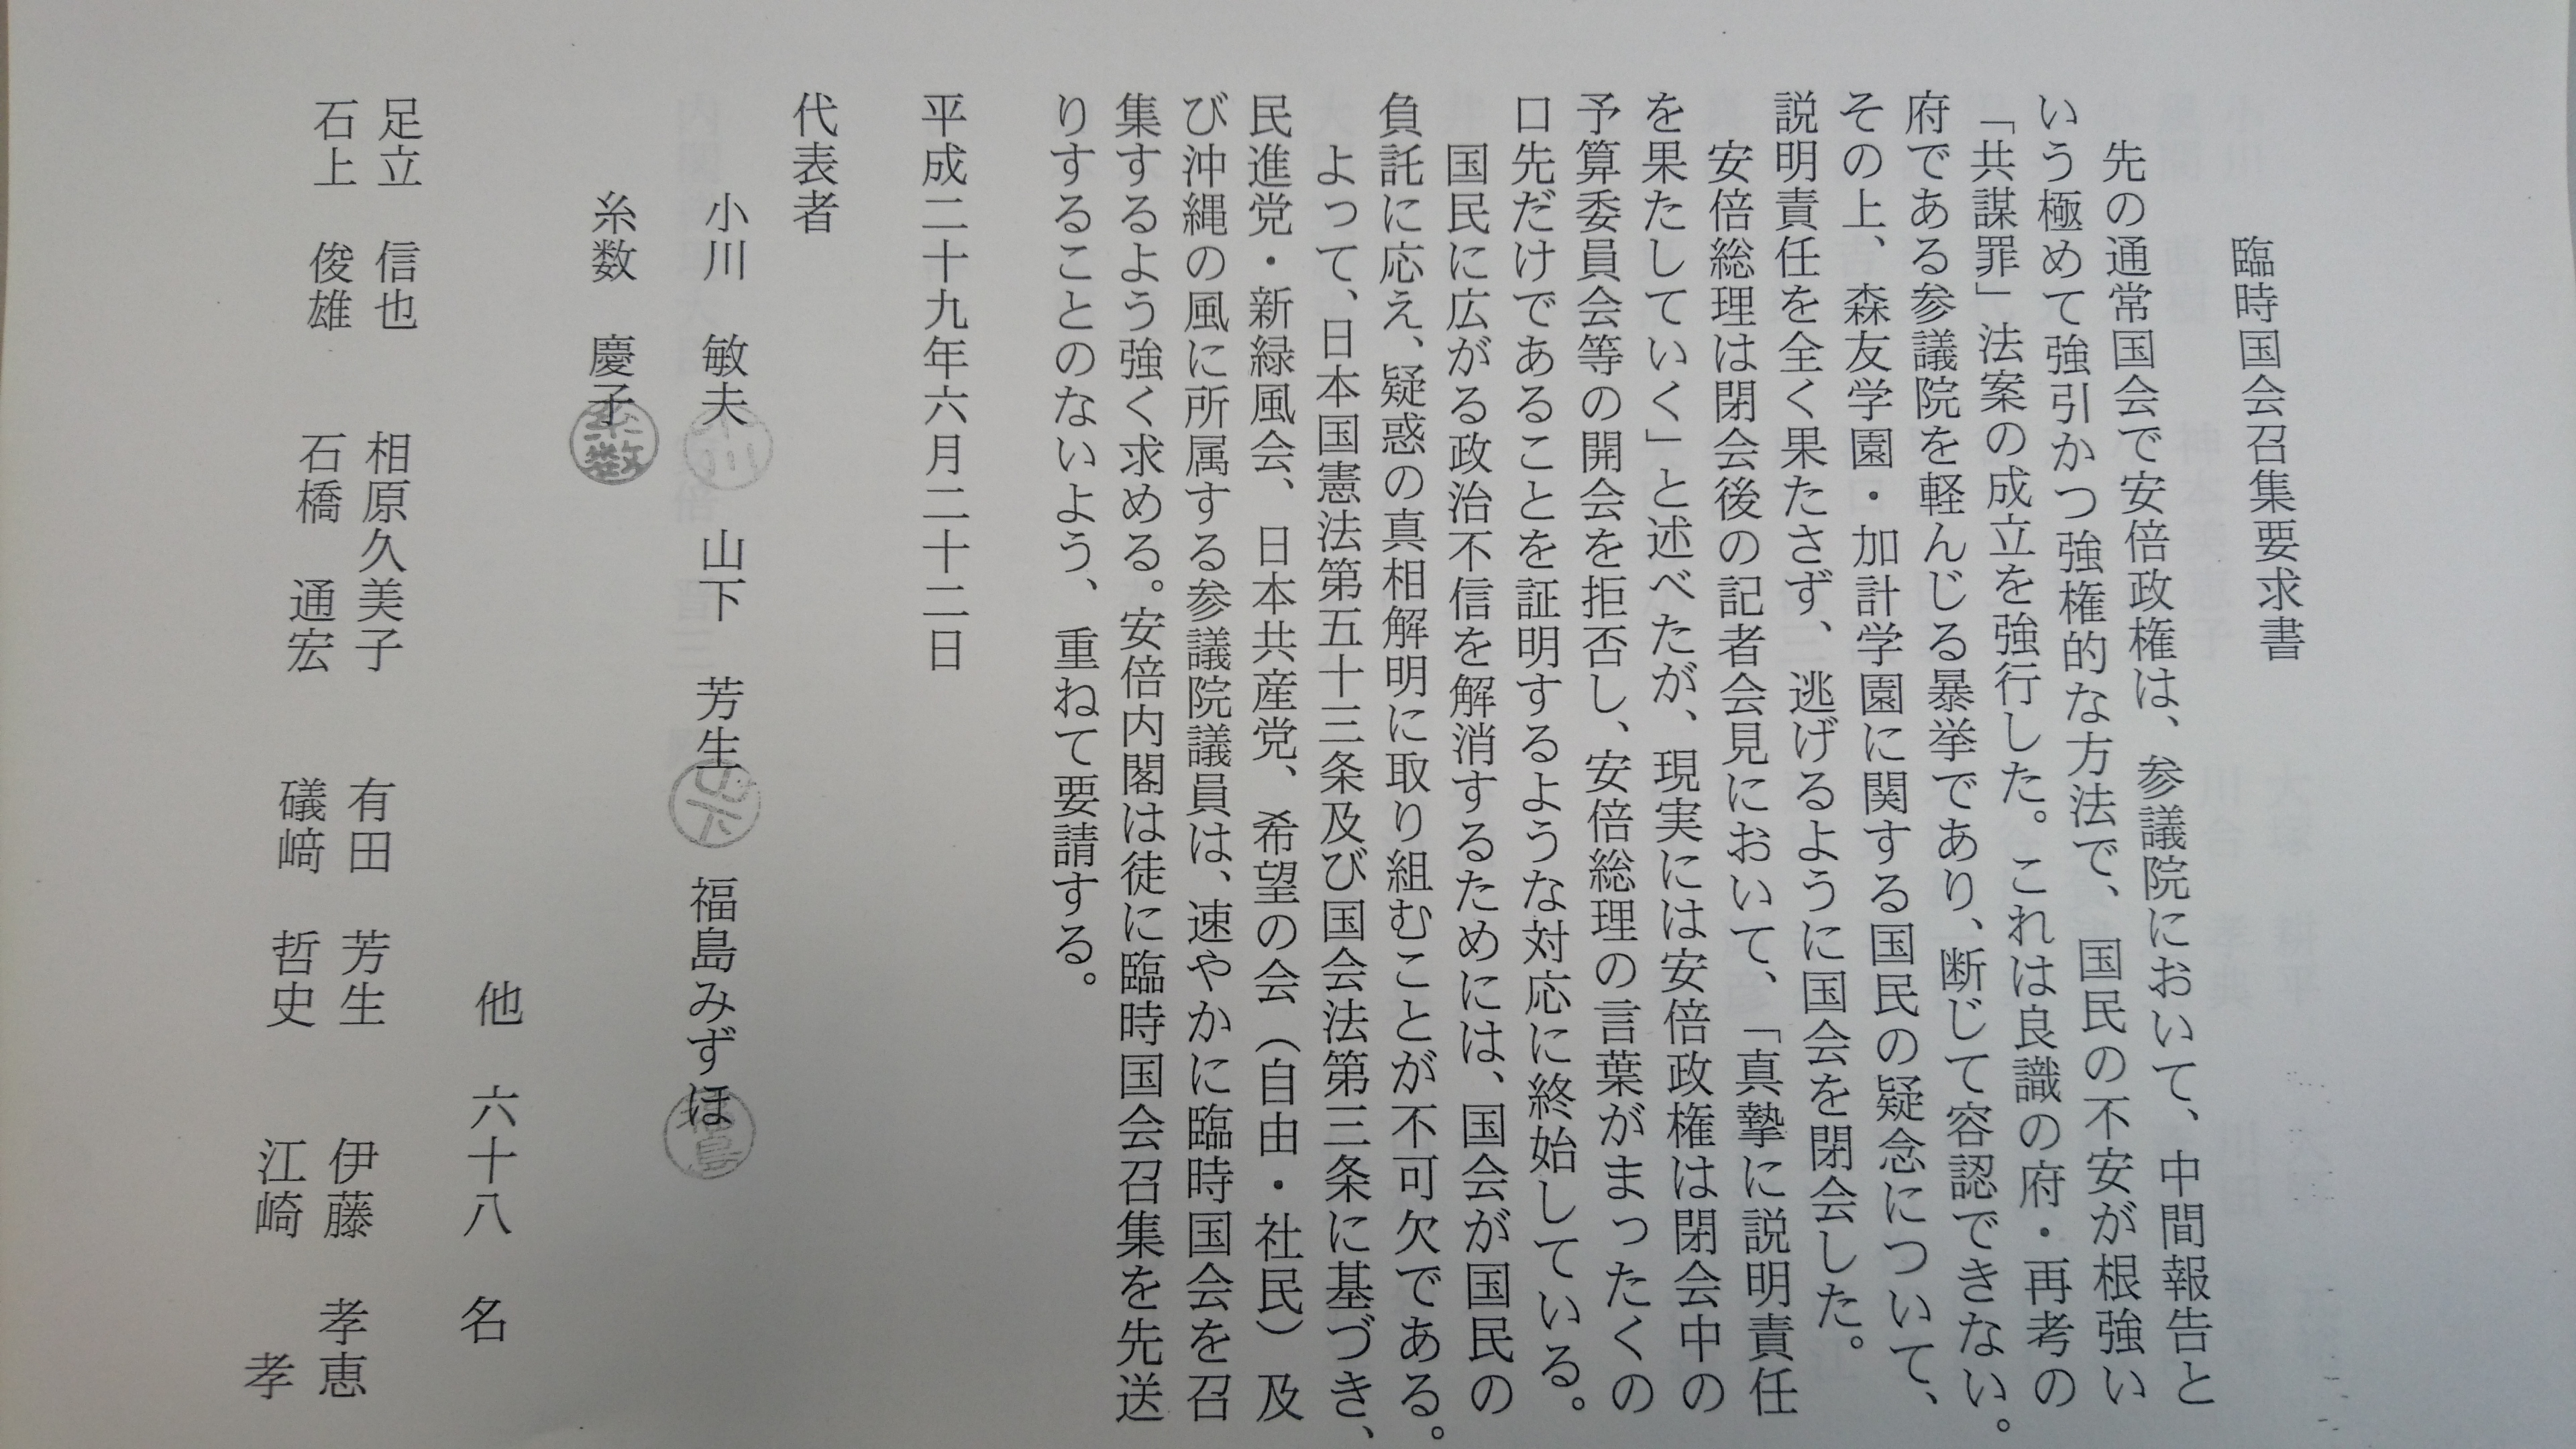 https://www.inoue-satoshi.com/diary/DSC_0325%5B1%5D.JPG